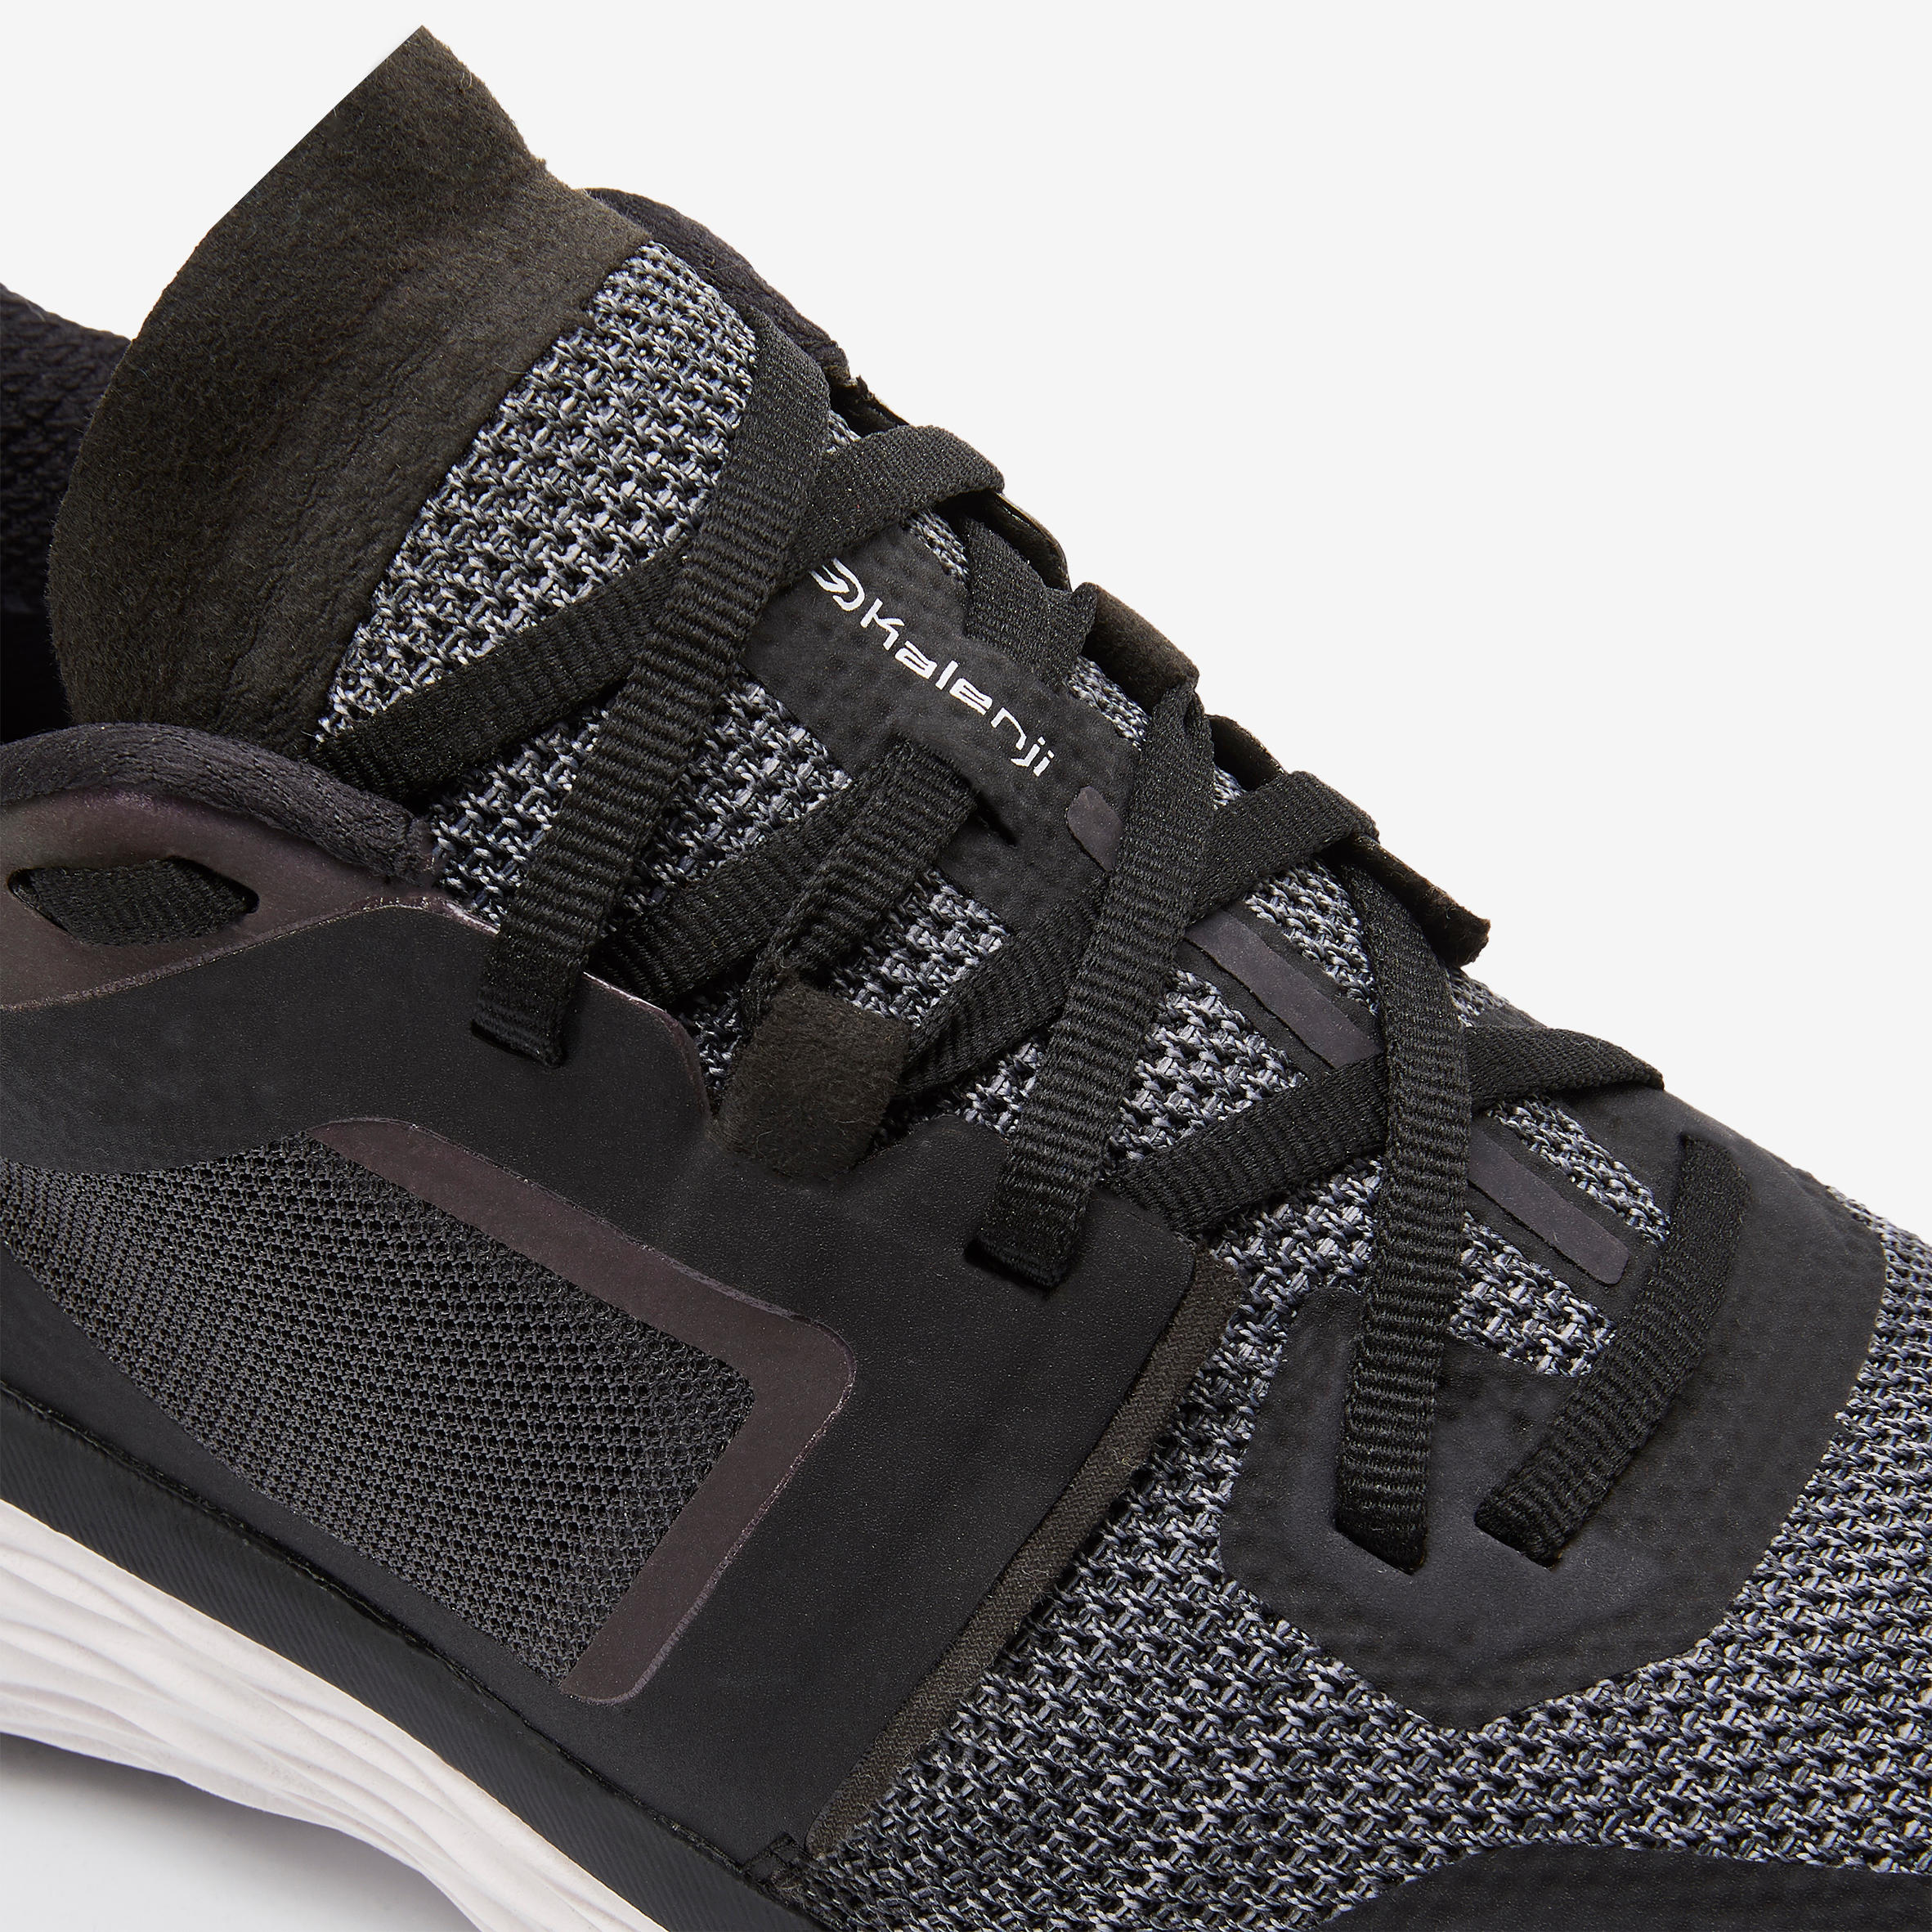 Women's Running Shoes - Run Comfort Dark Grey - Carbon grey - Kalenji -  Decathlon